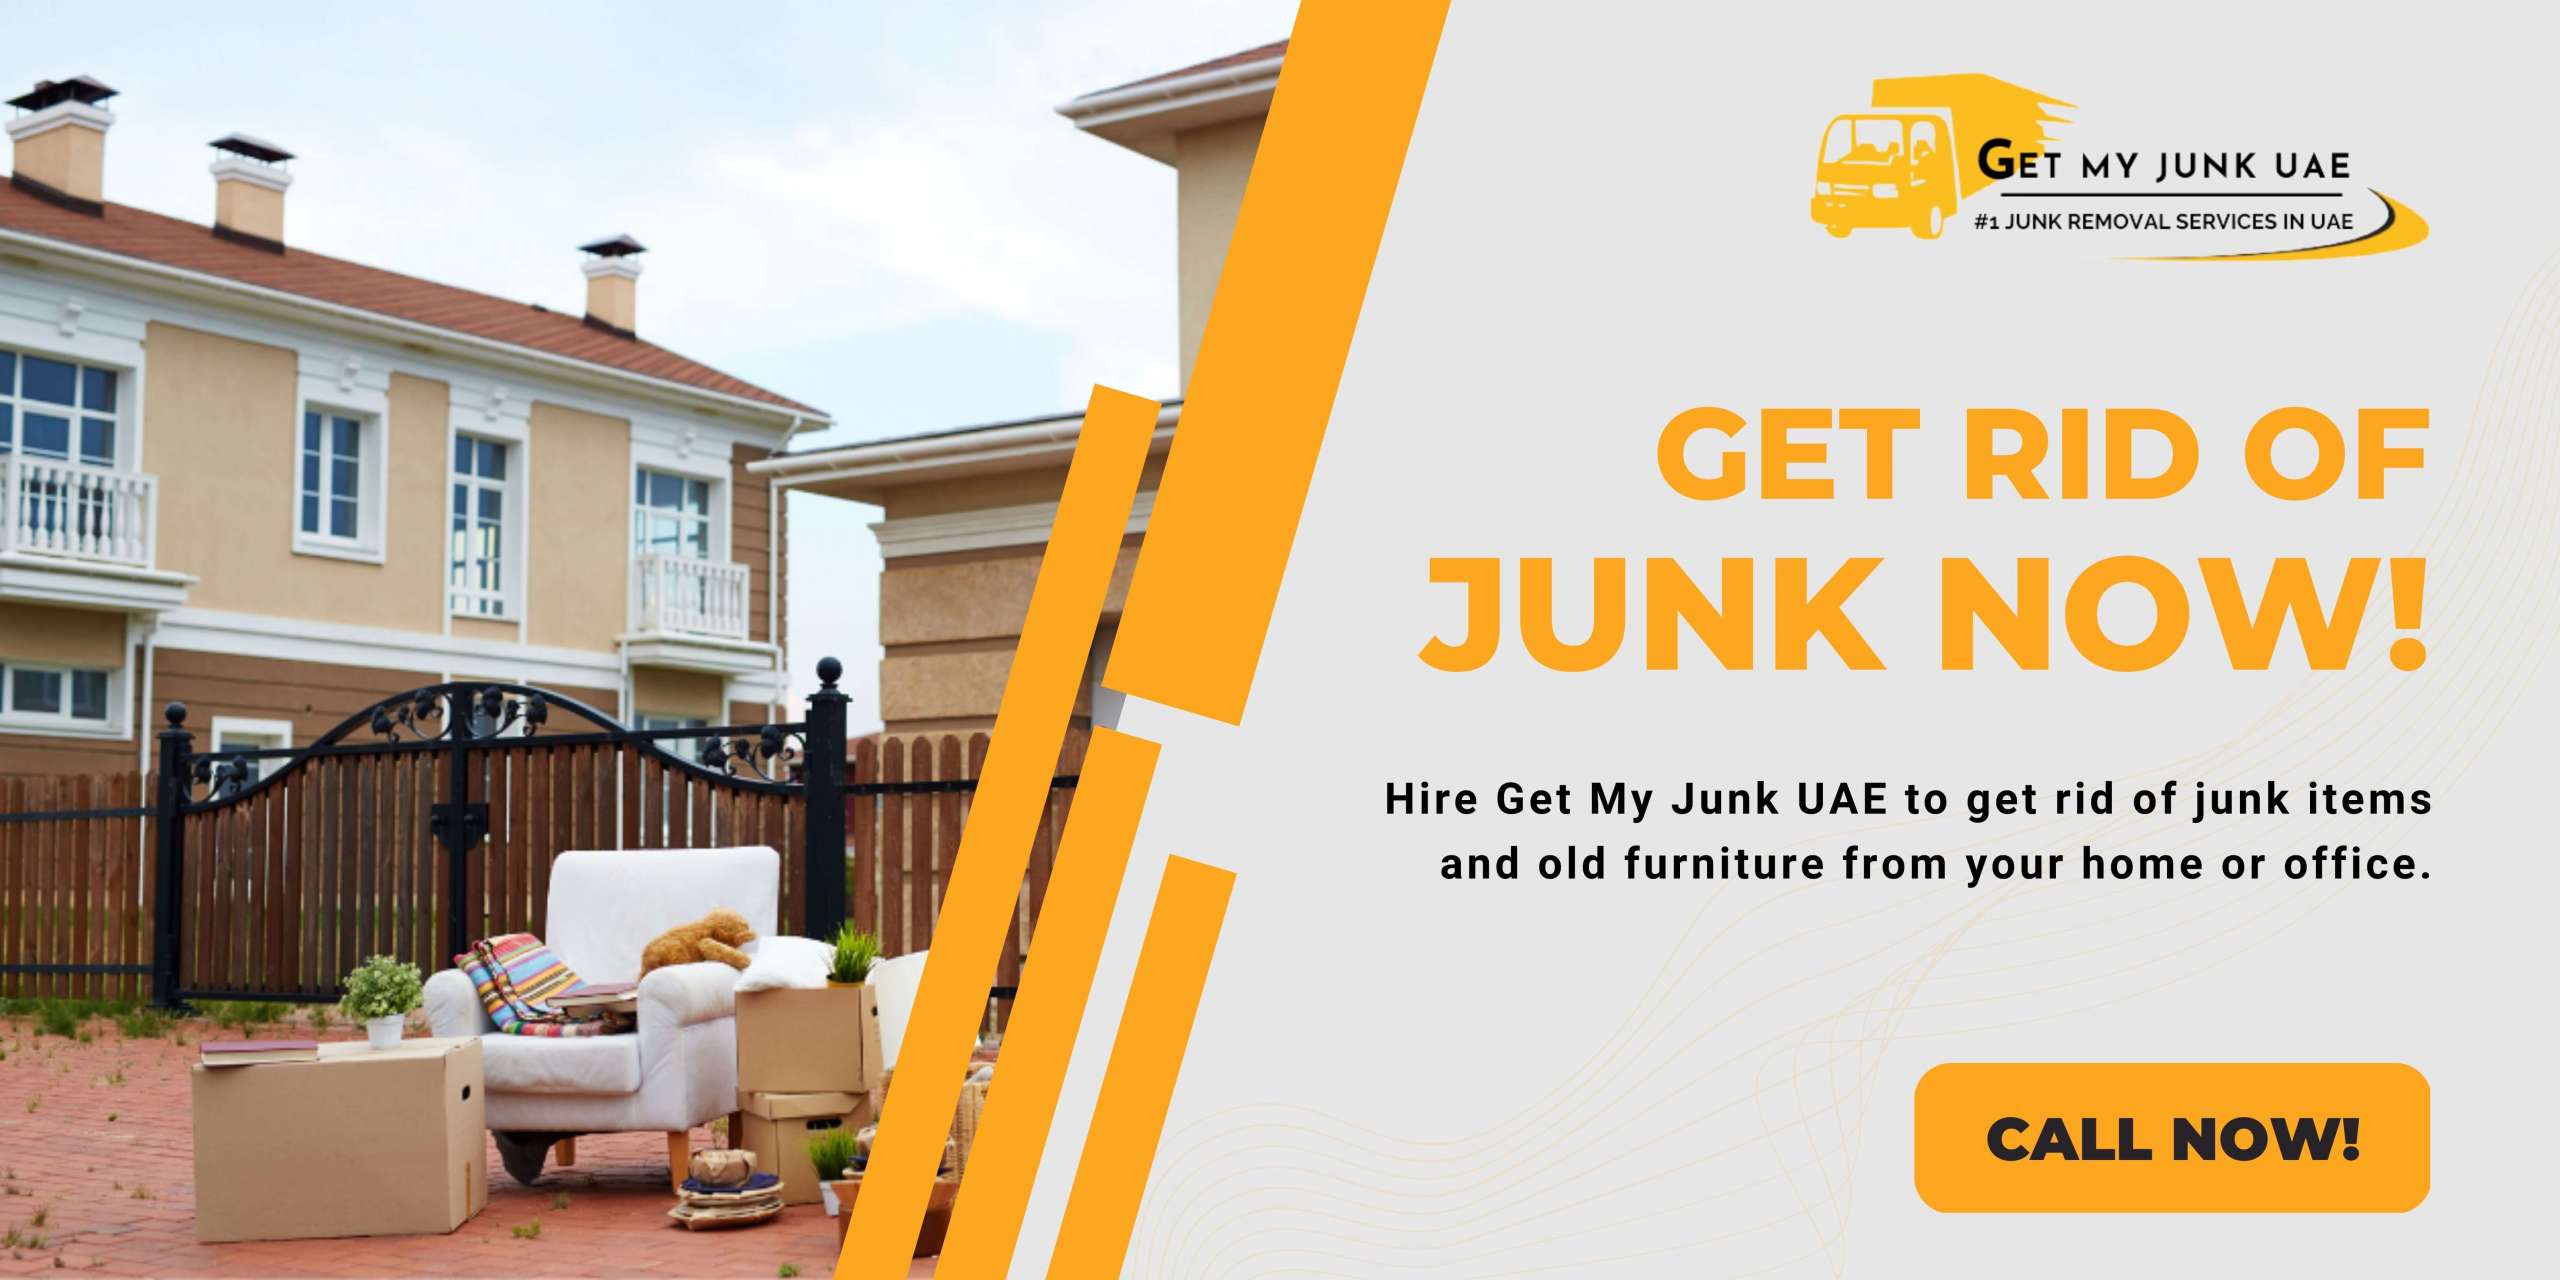 Get My Junk UAE - How to Get Rid of Junk Furniture in Dubai Get My Junk UAE scaled